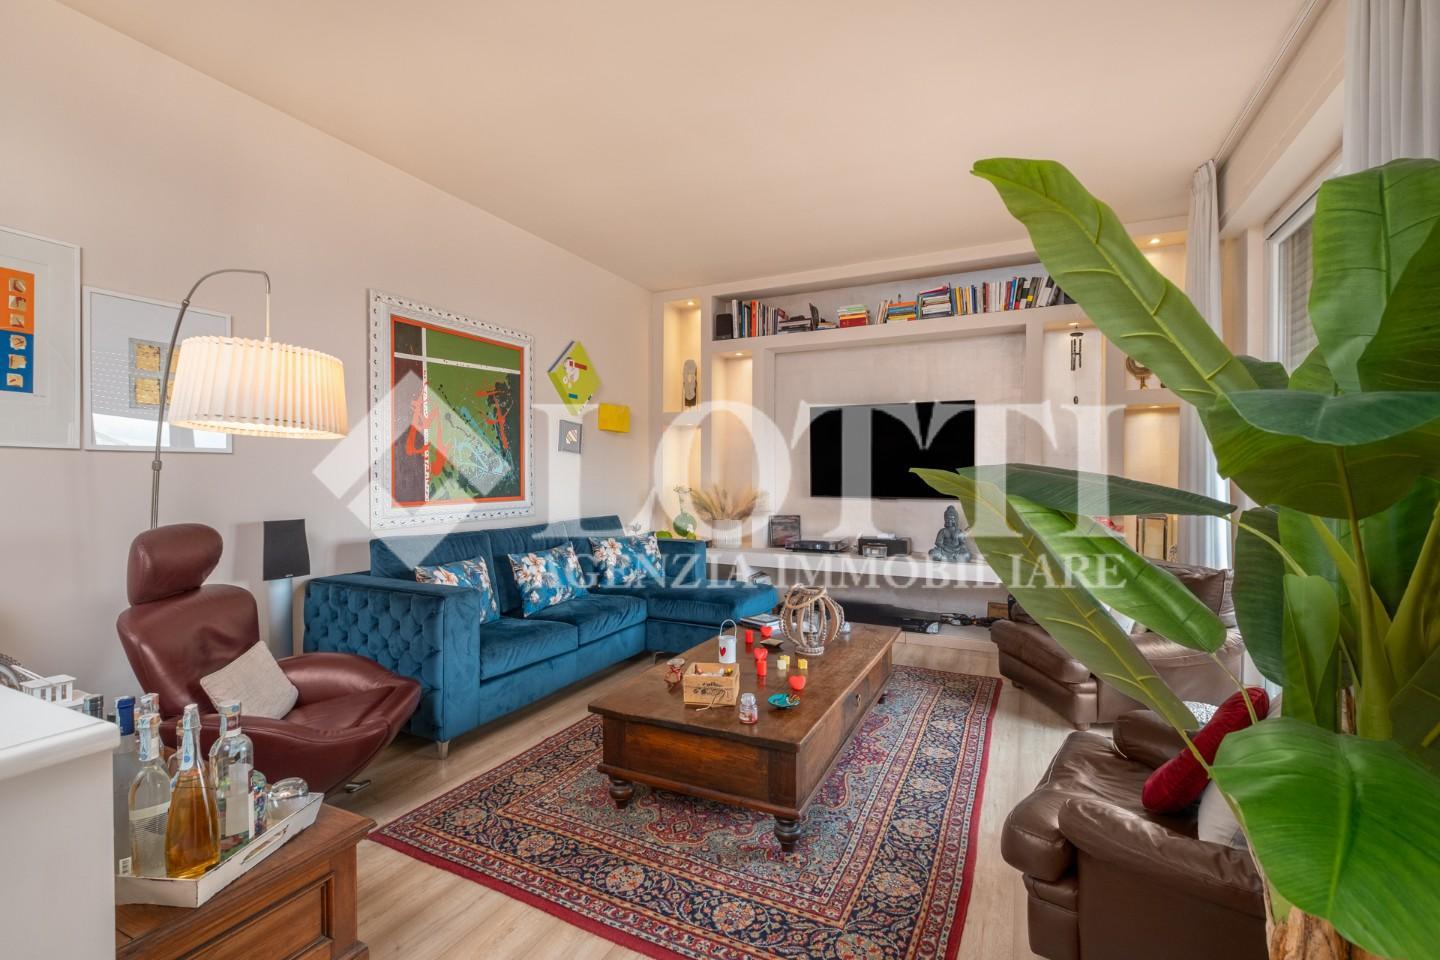 Apartment for sale in Bientina (PI)